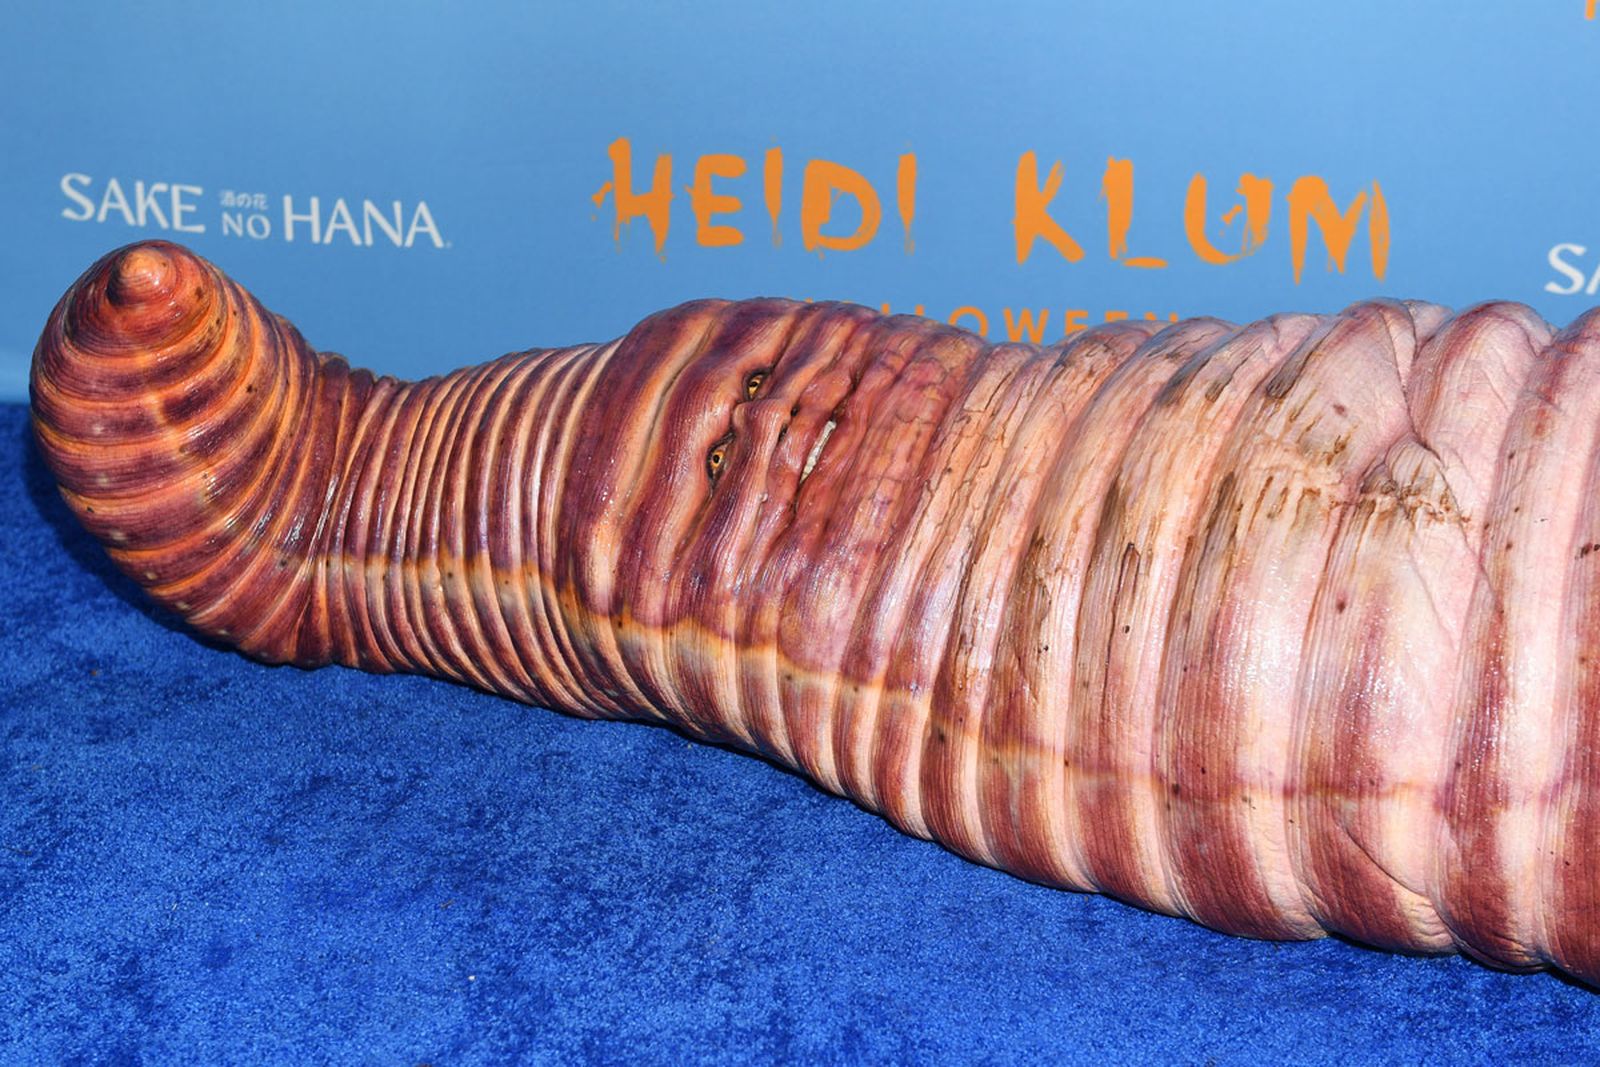 Heidi Klum Turned Into a Worm For Halloween